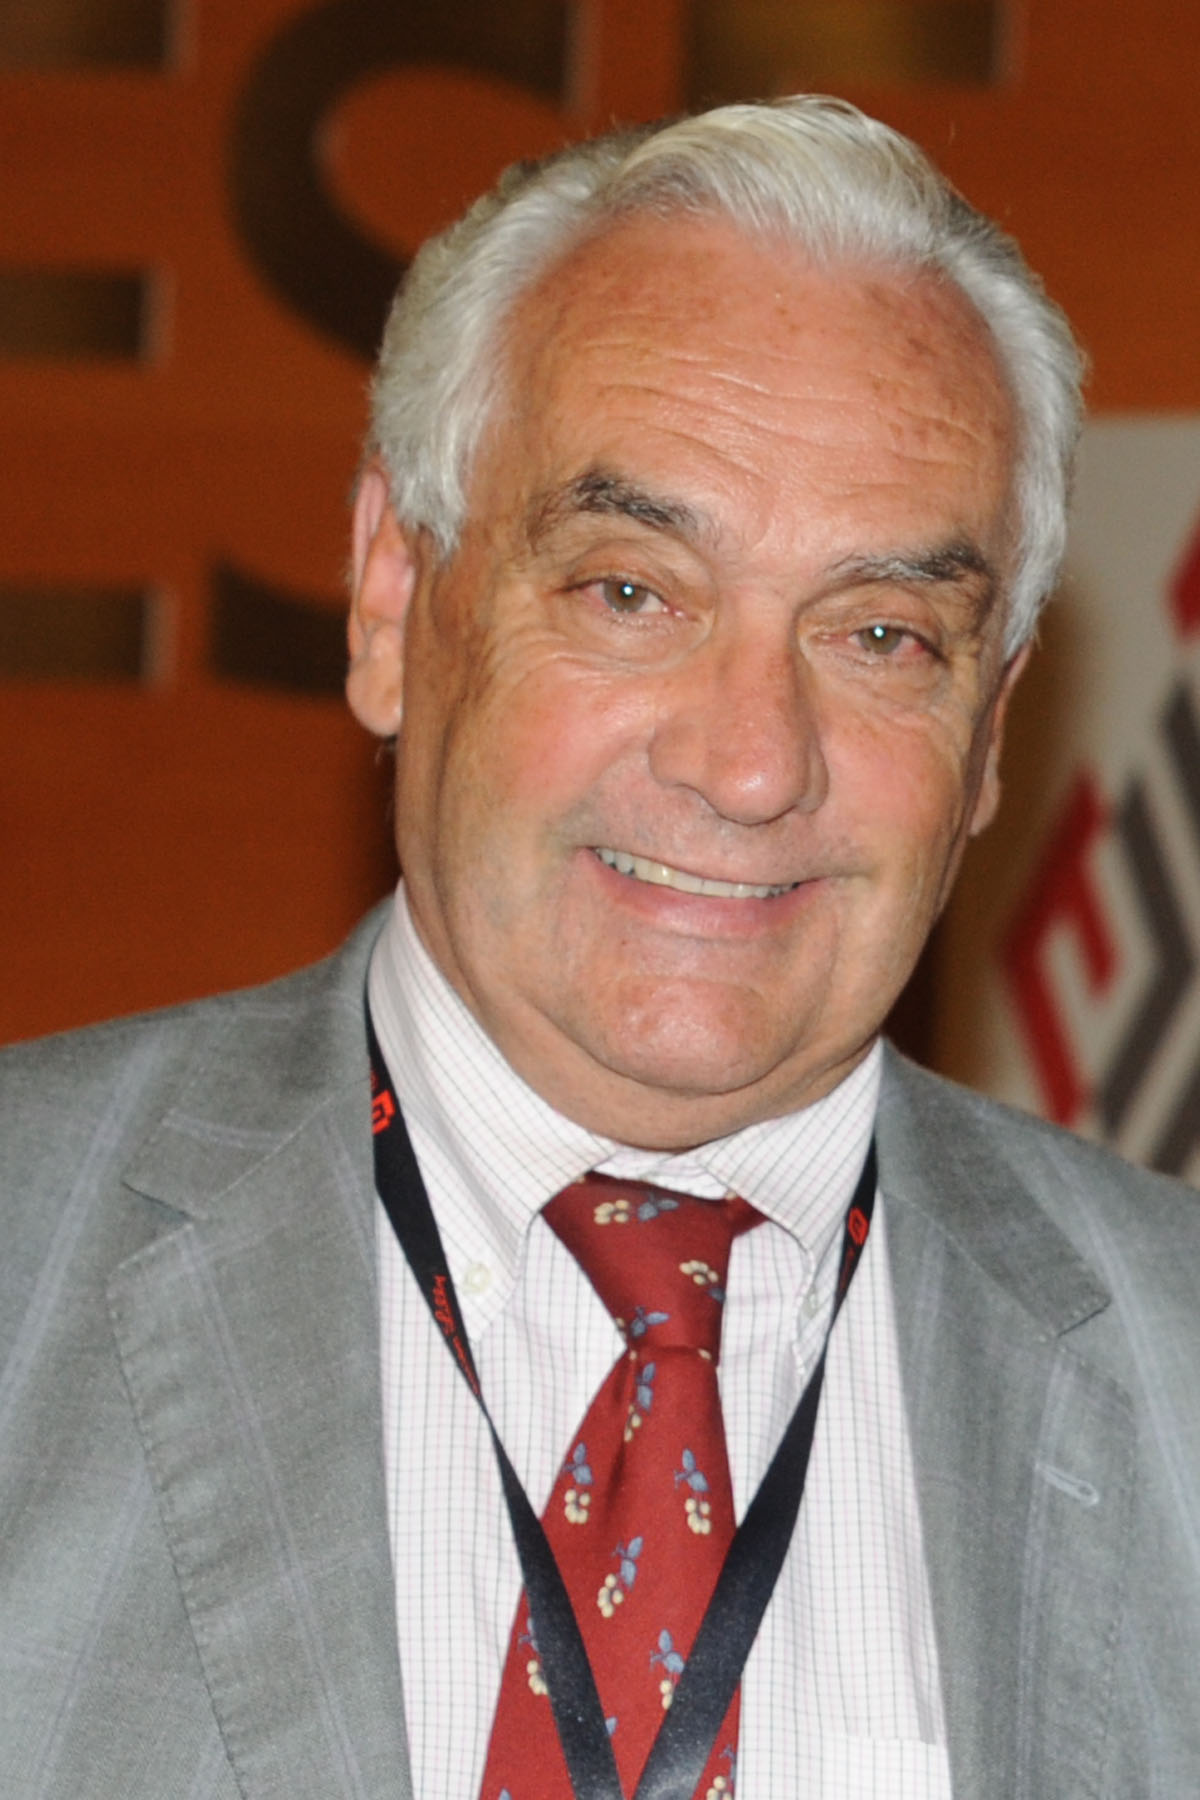 José Molero